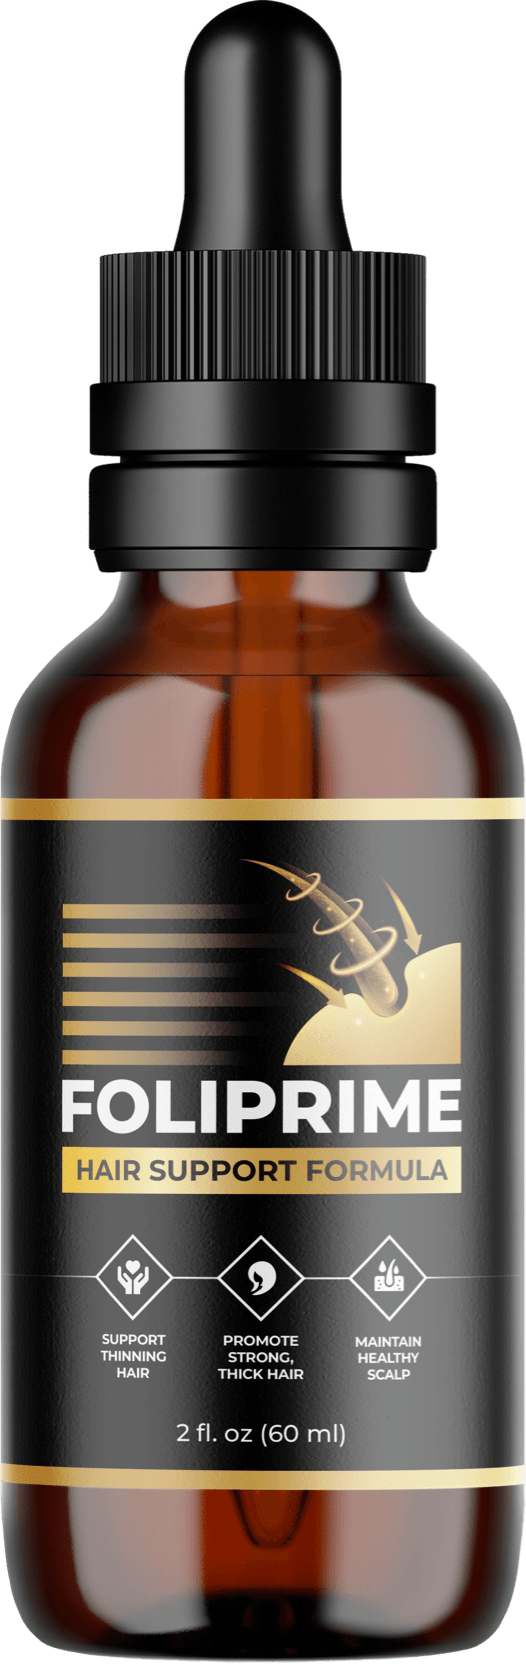 FoliPrime Hair Loss Supplements - Maintain Hair And Scalp Health